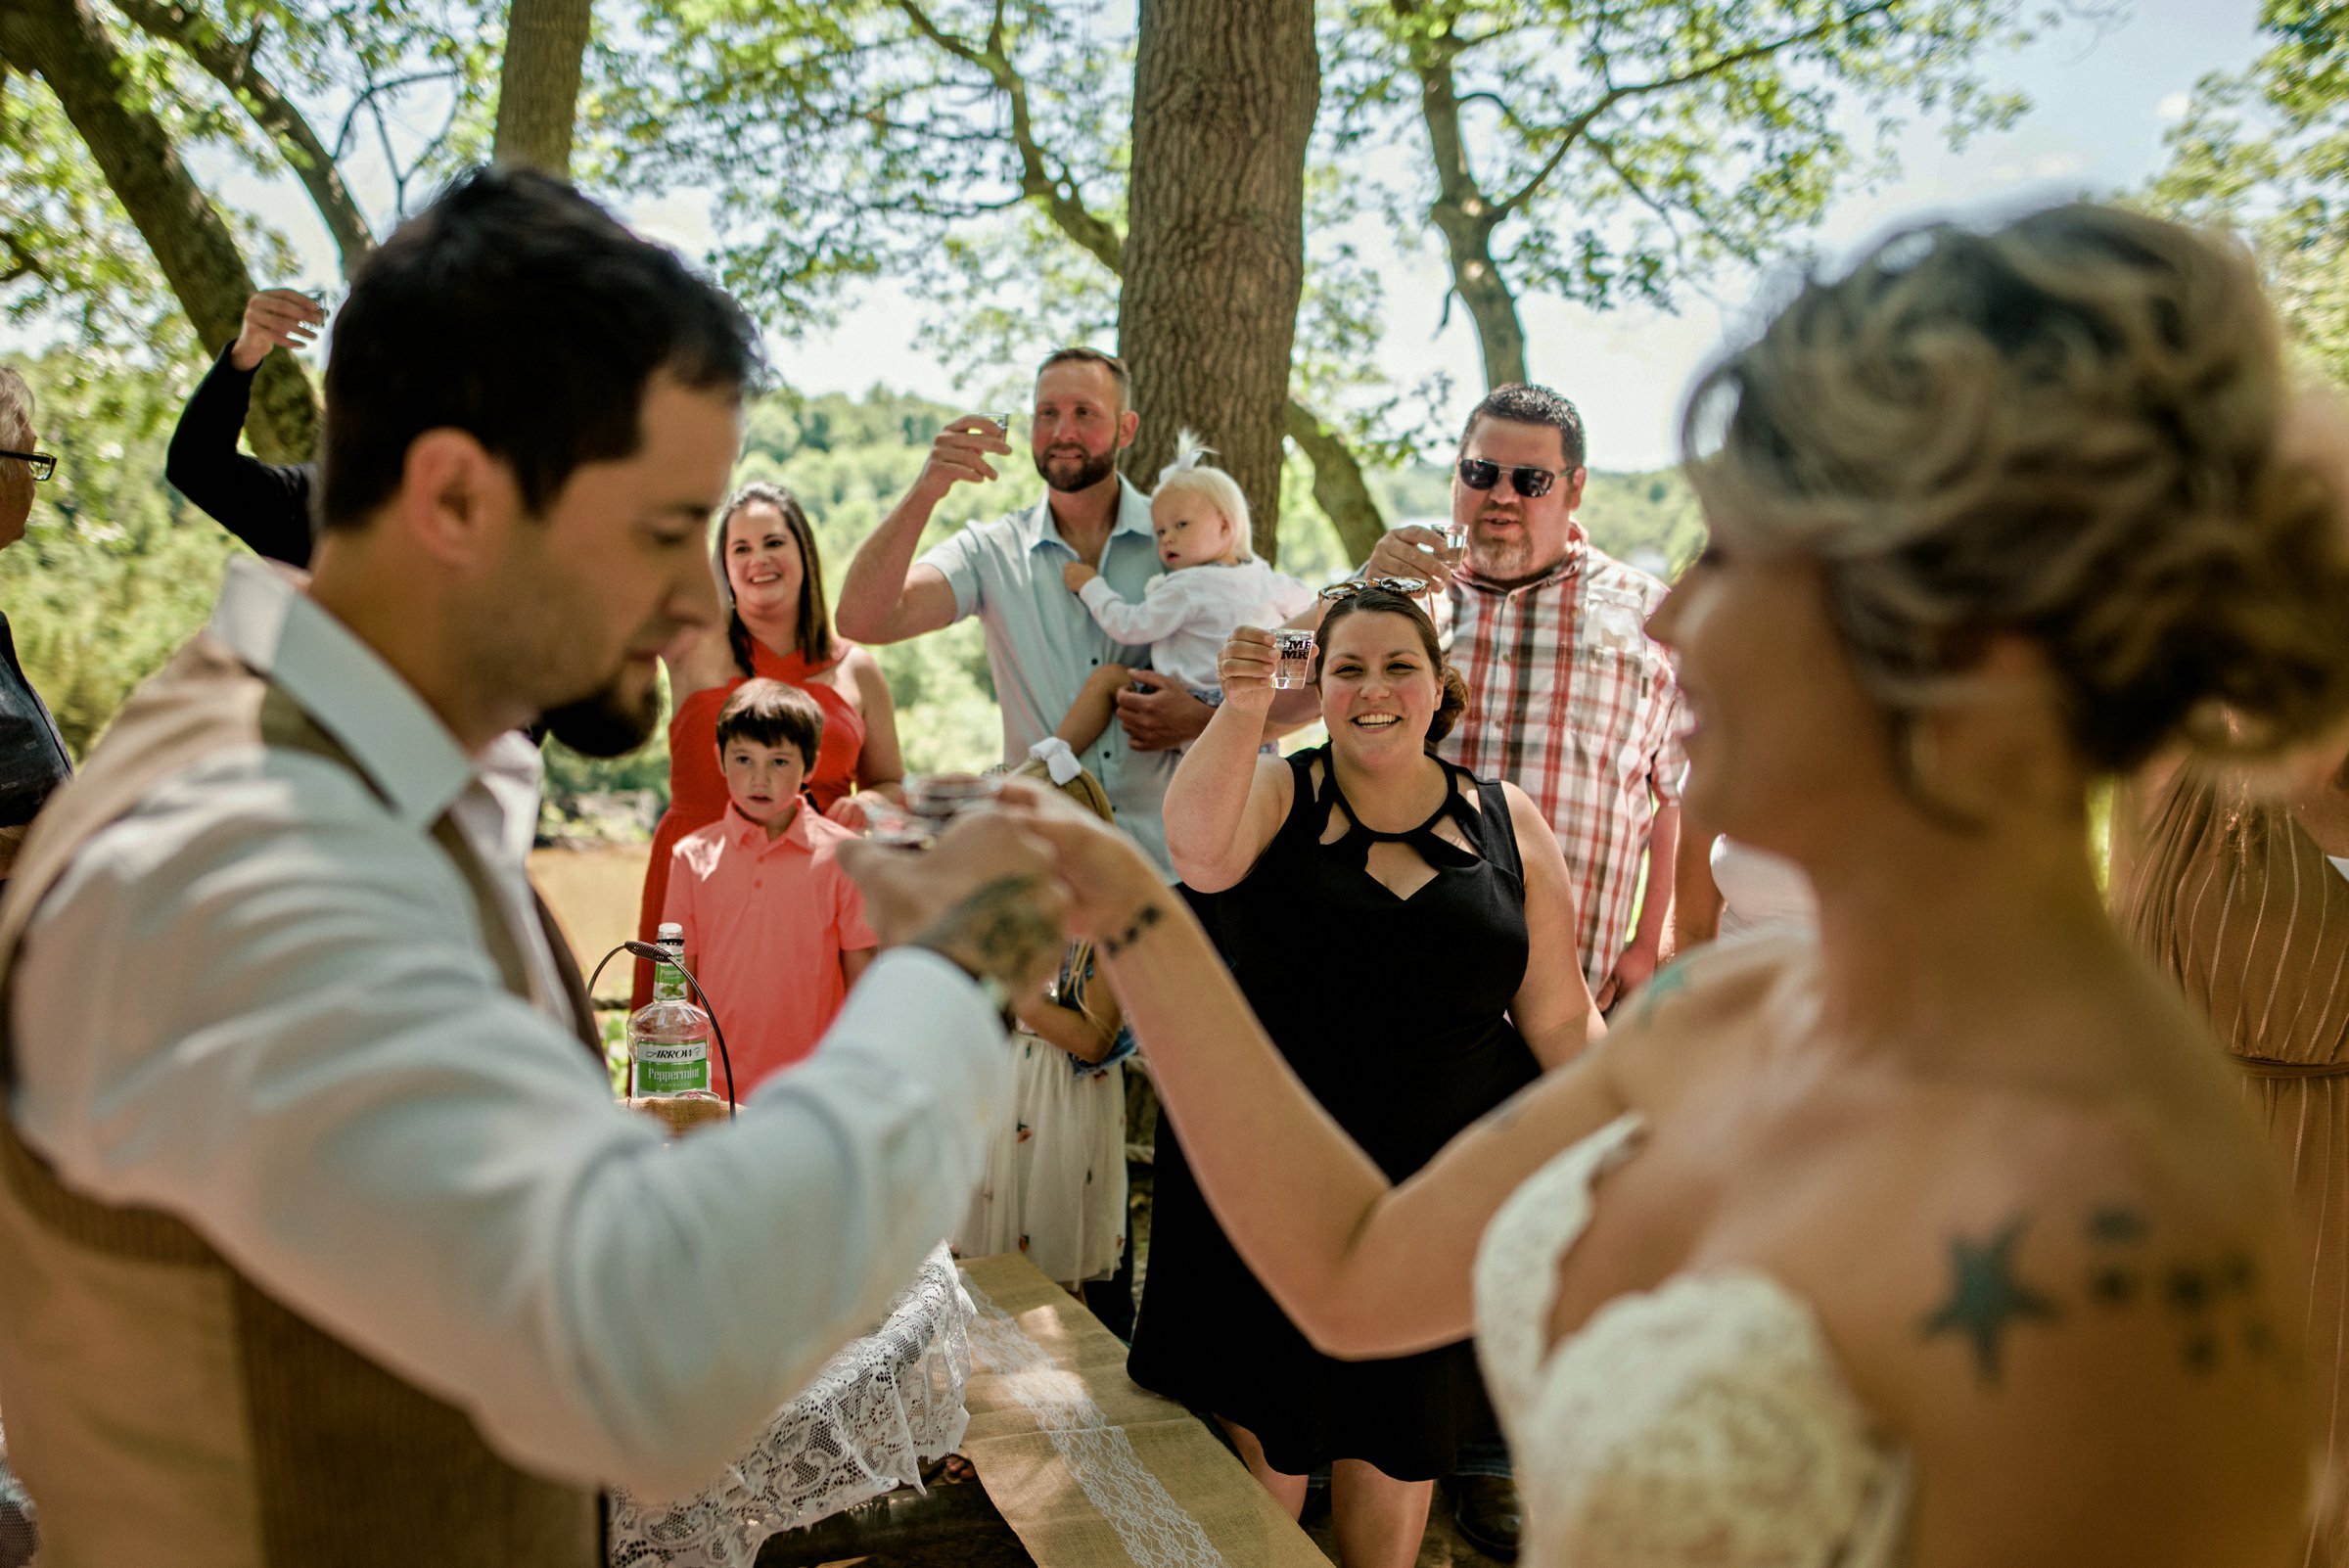 Grand River Michigan Intimate Wedding - by Ryan Inman 52.jpg